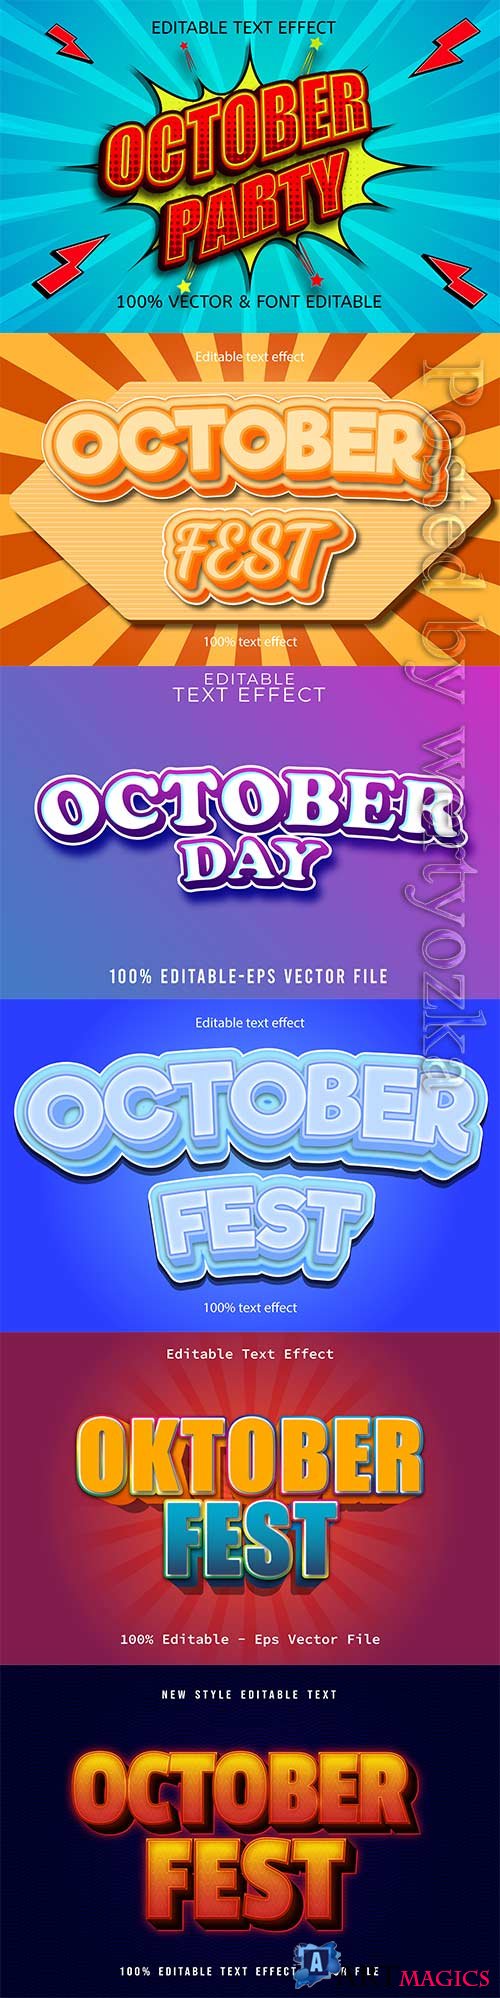 October fest editable text effect vol 10